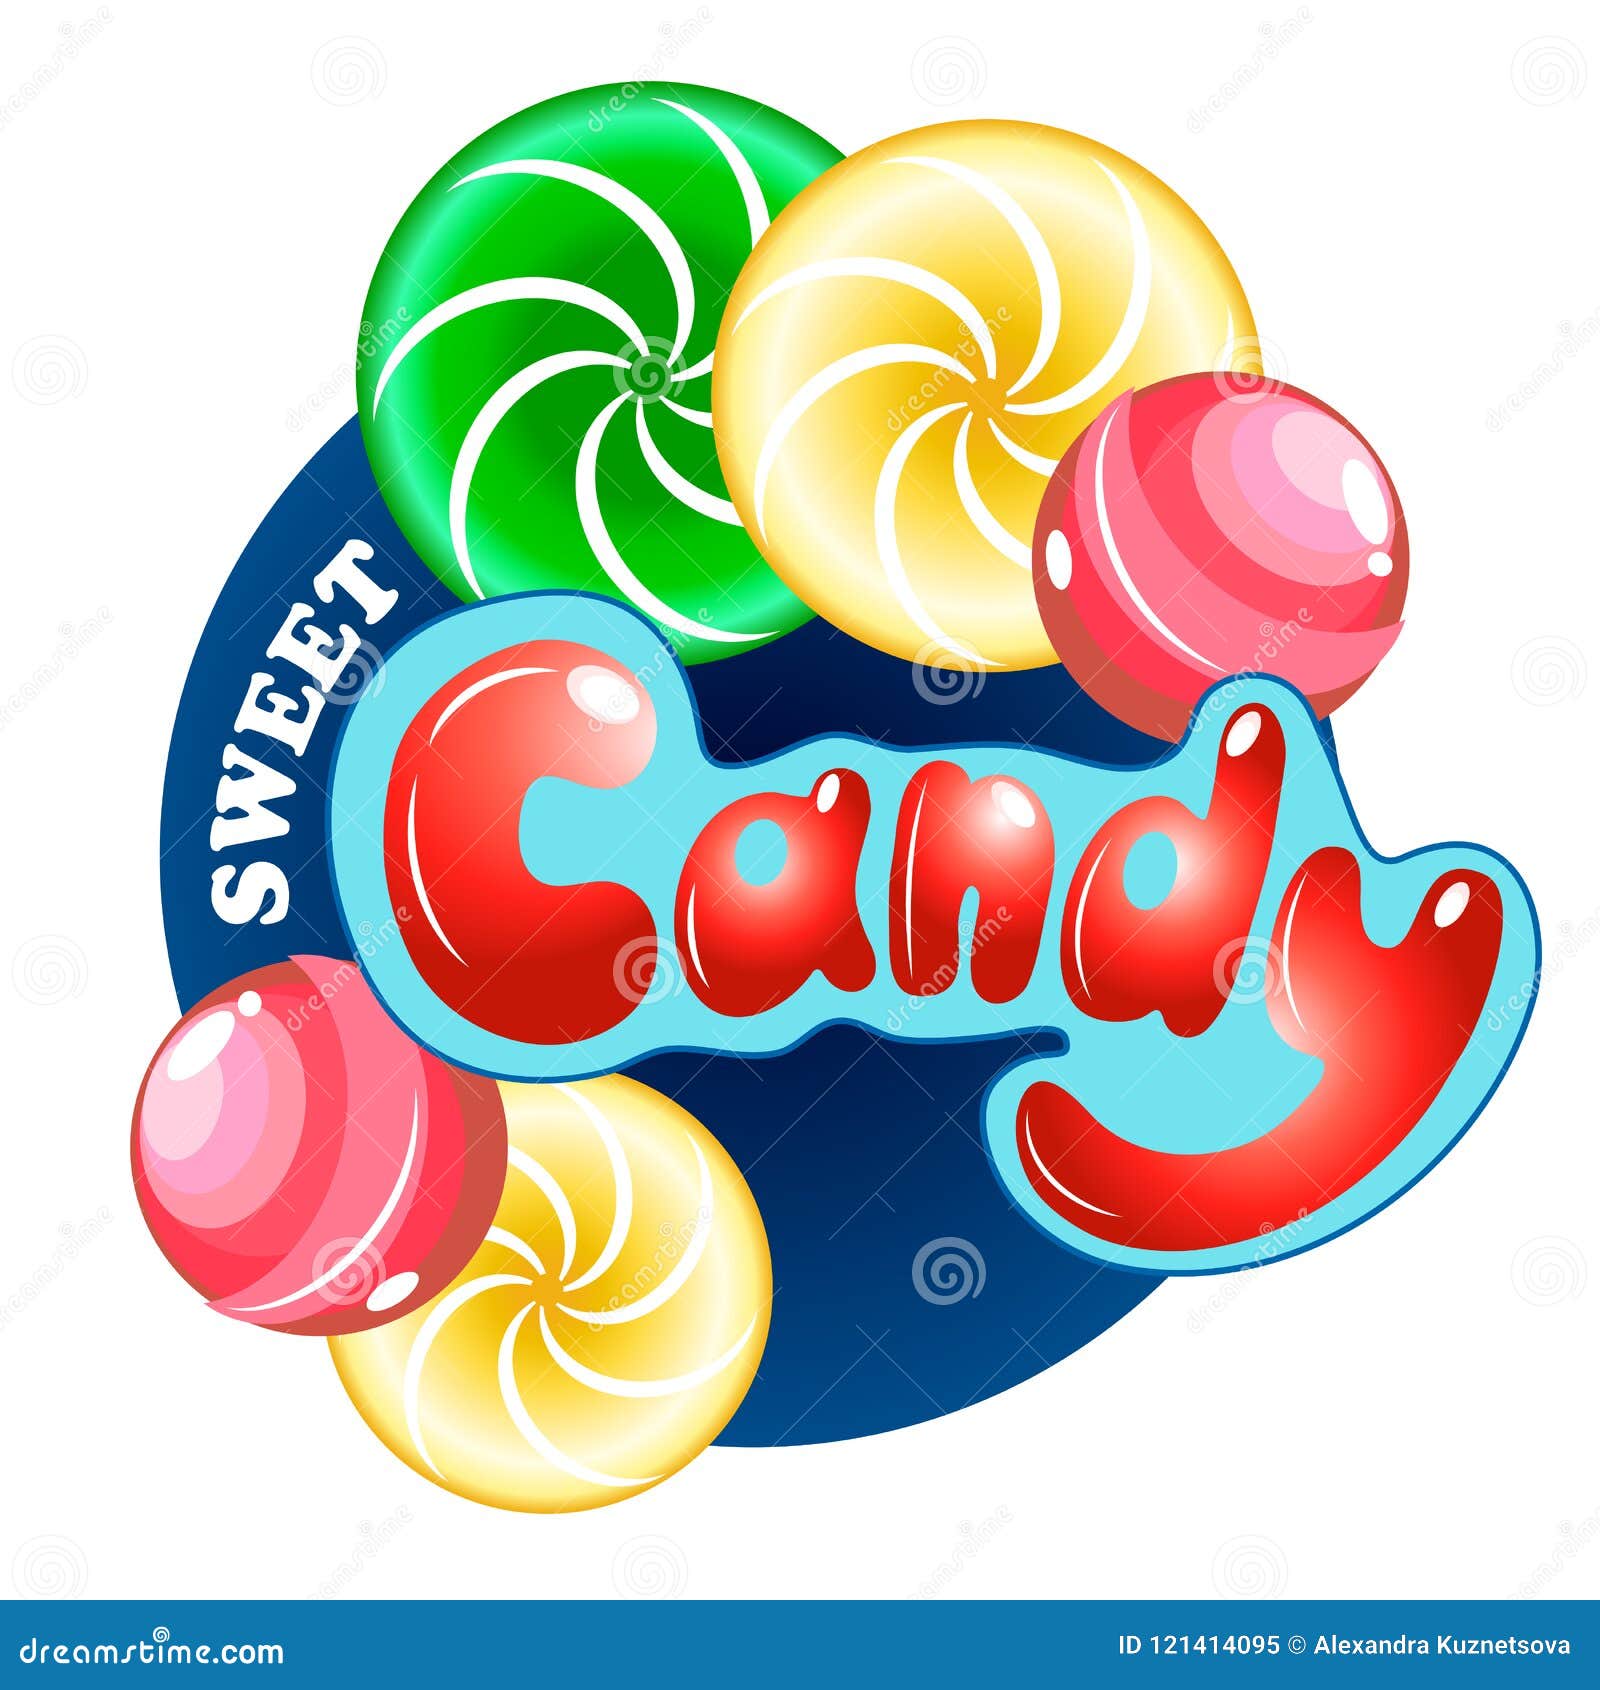 Candy set with lettering stock illustration. Illustration of logo ...